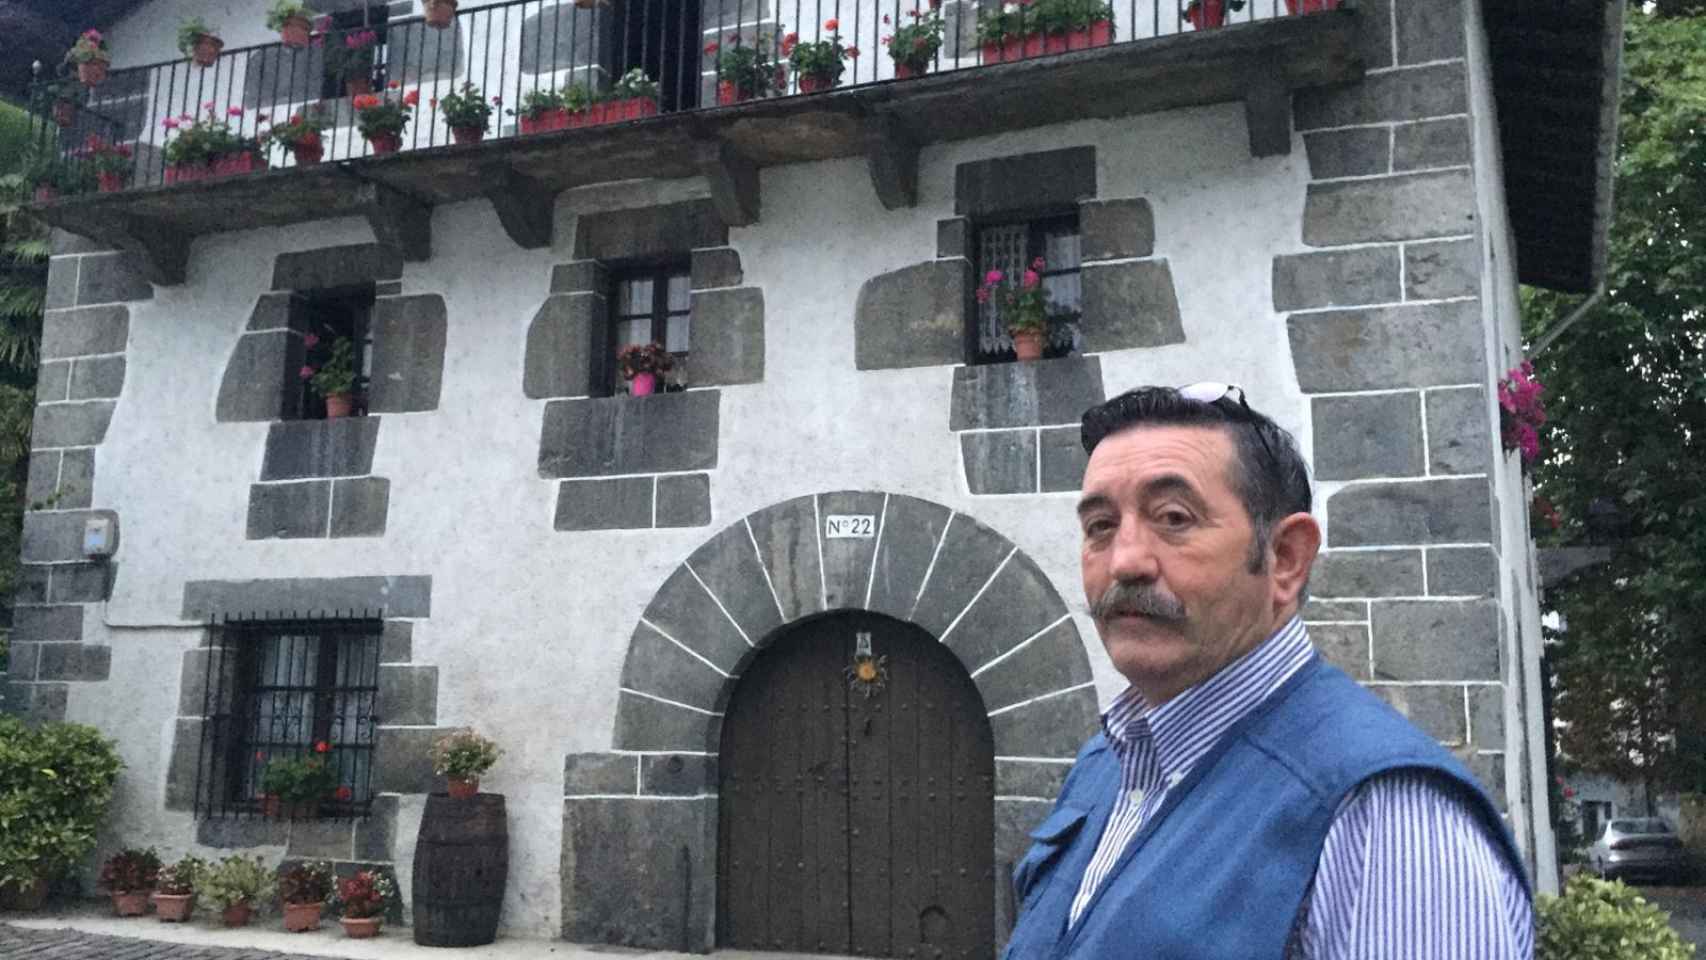 Silvestre Zubiaur, único concejal de Leiza que no es de Bildu, frente a la casa de Ocho apellidos vascos